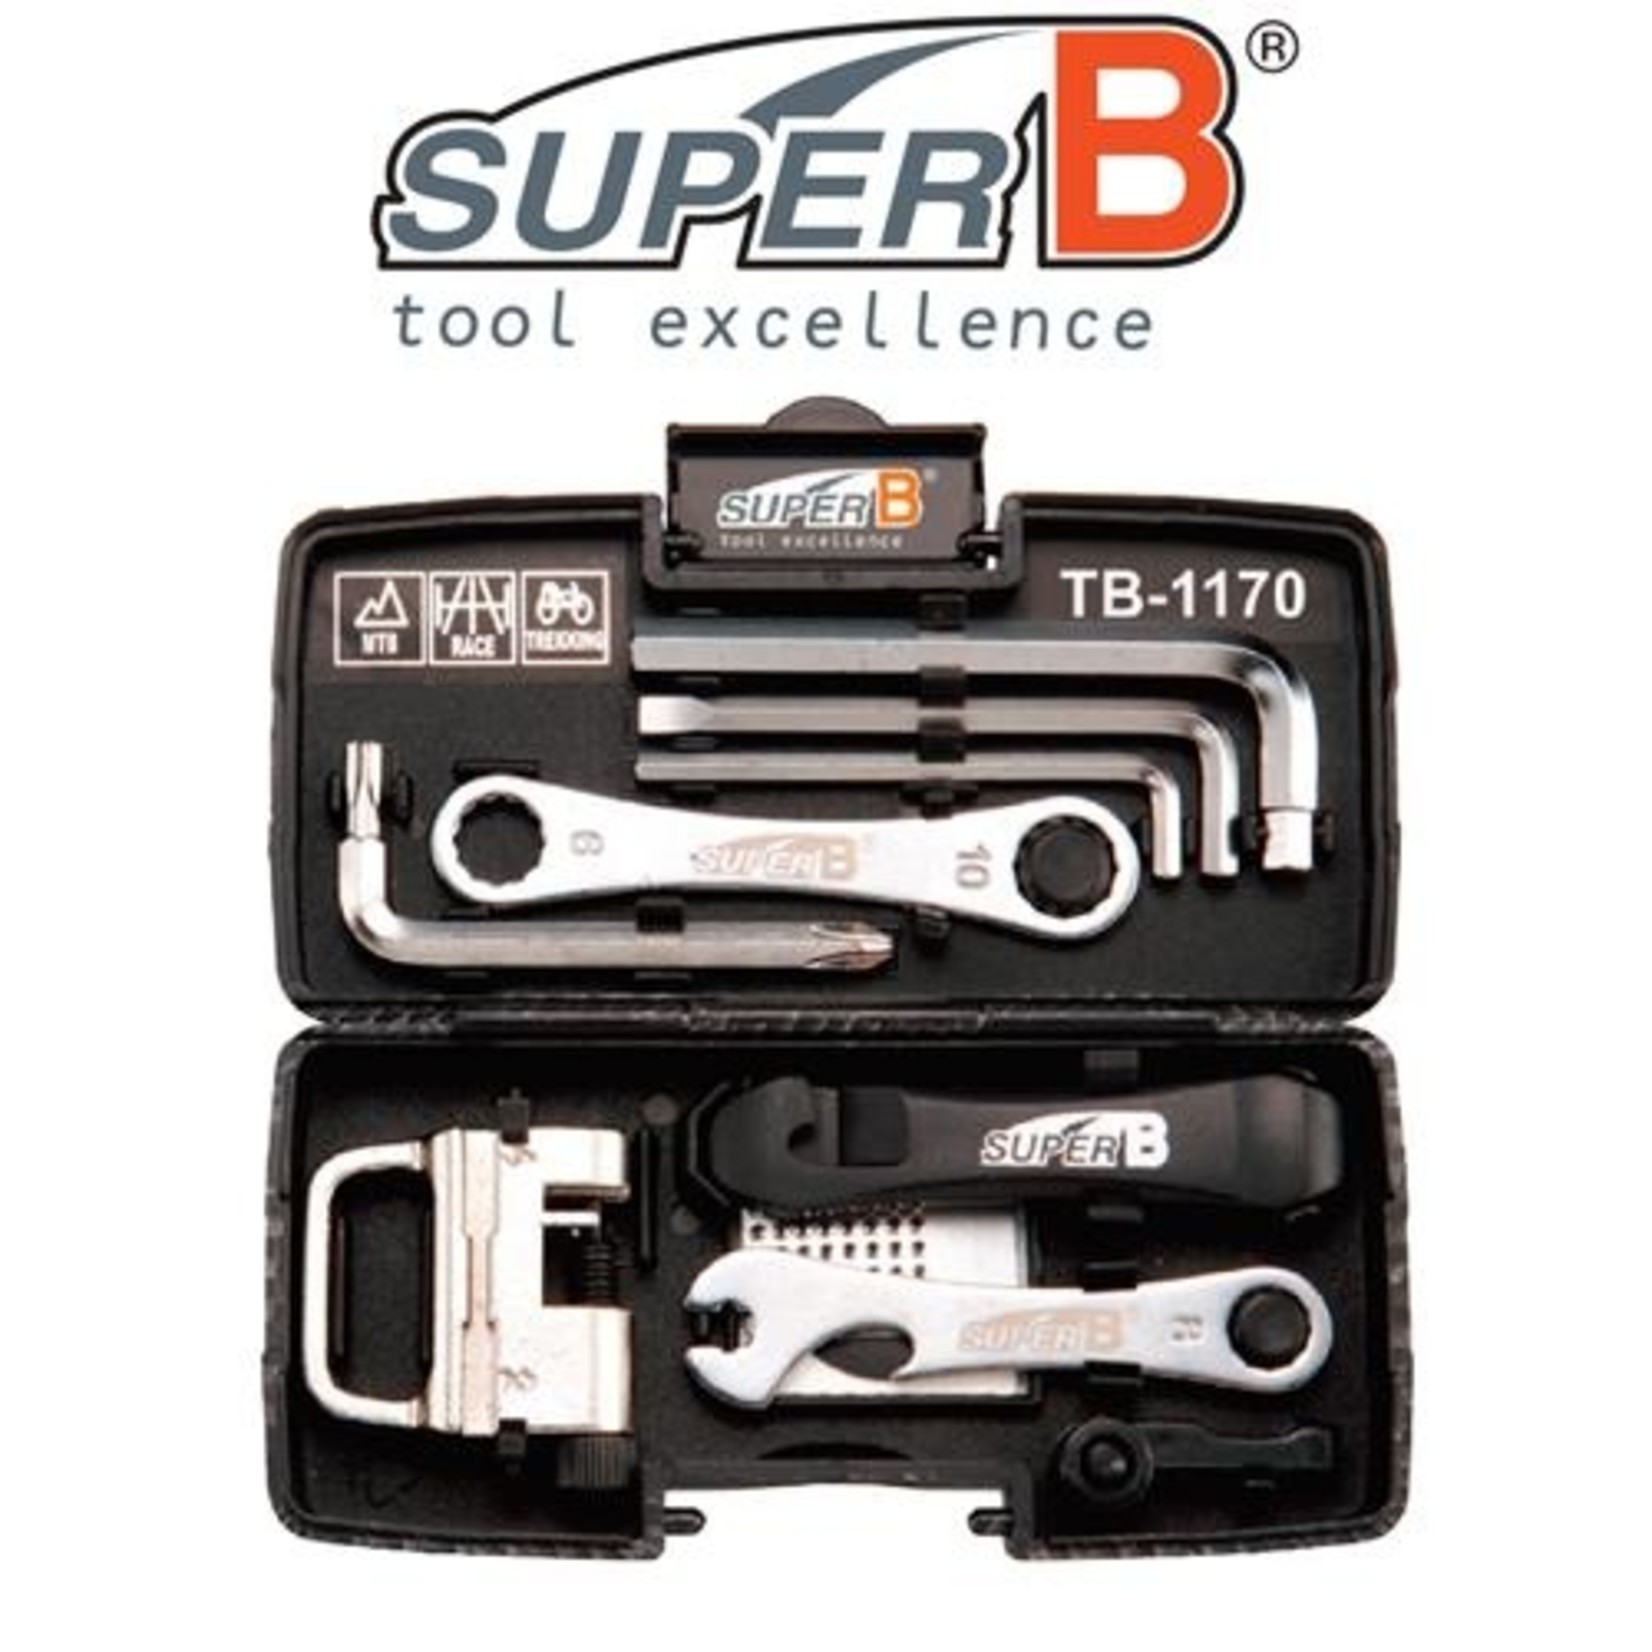 Super B SuperB 24 in 1 Multi Tool Set - Bike Tool